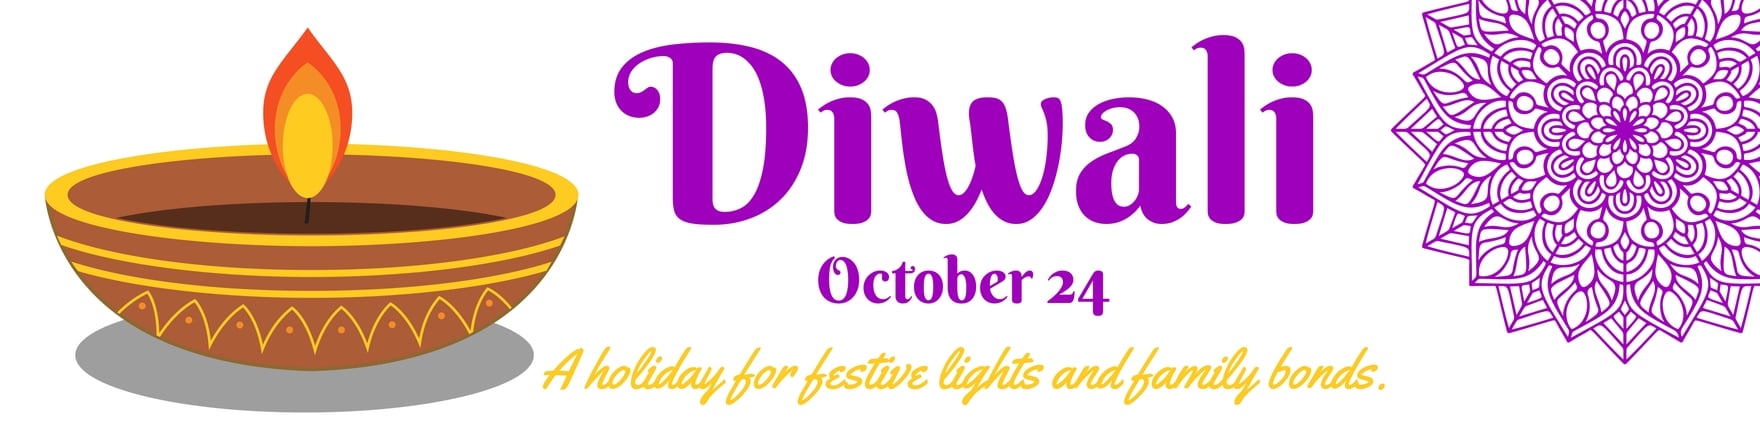 Diwali Templates - Design, Free, Download 